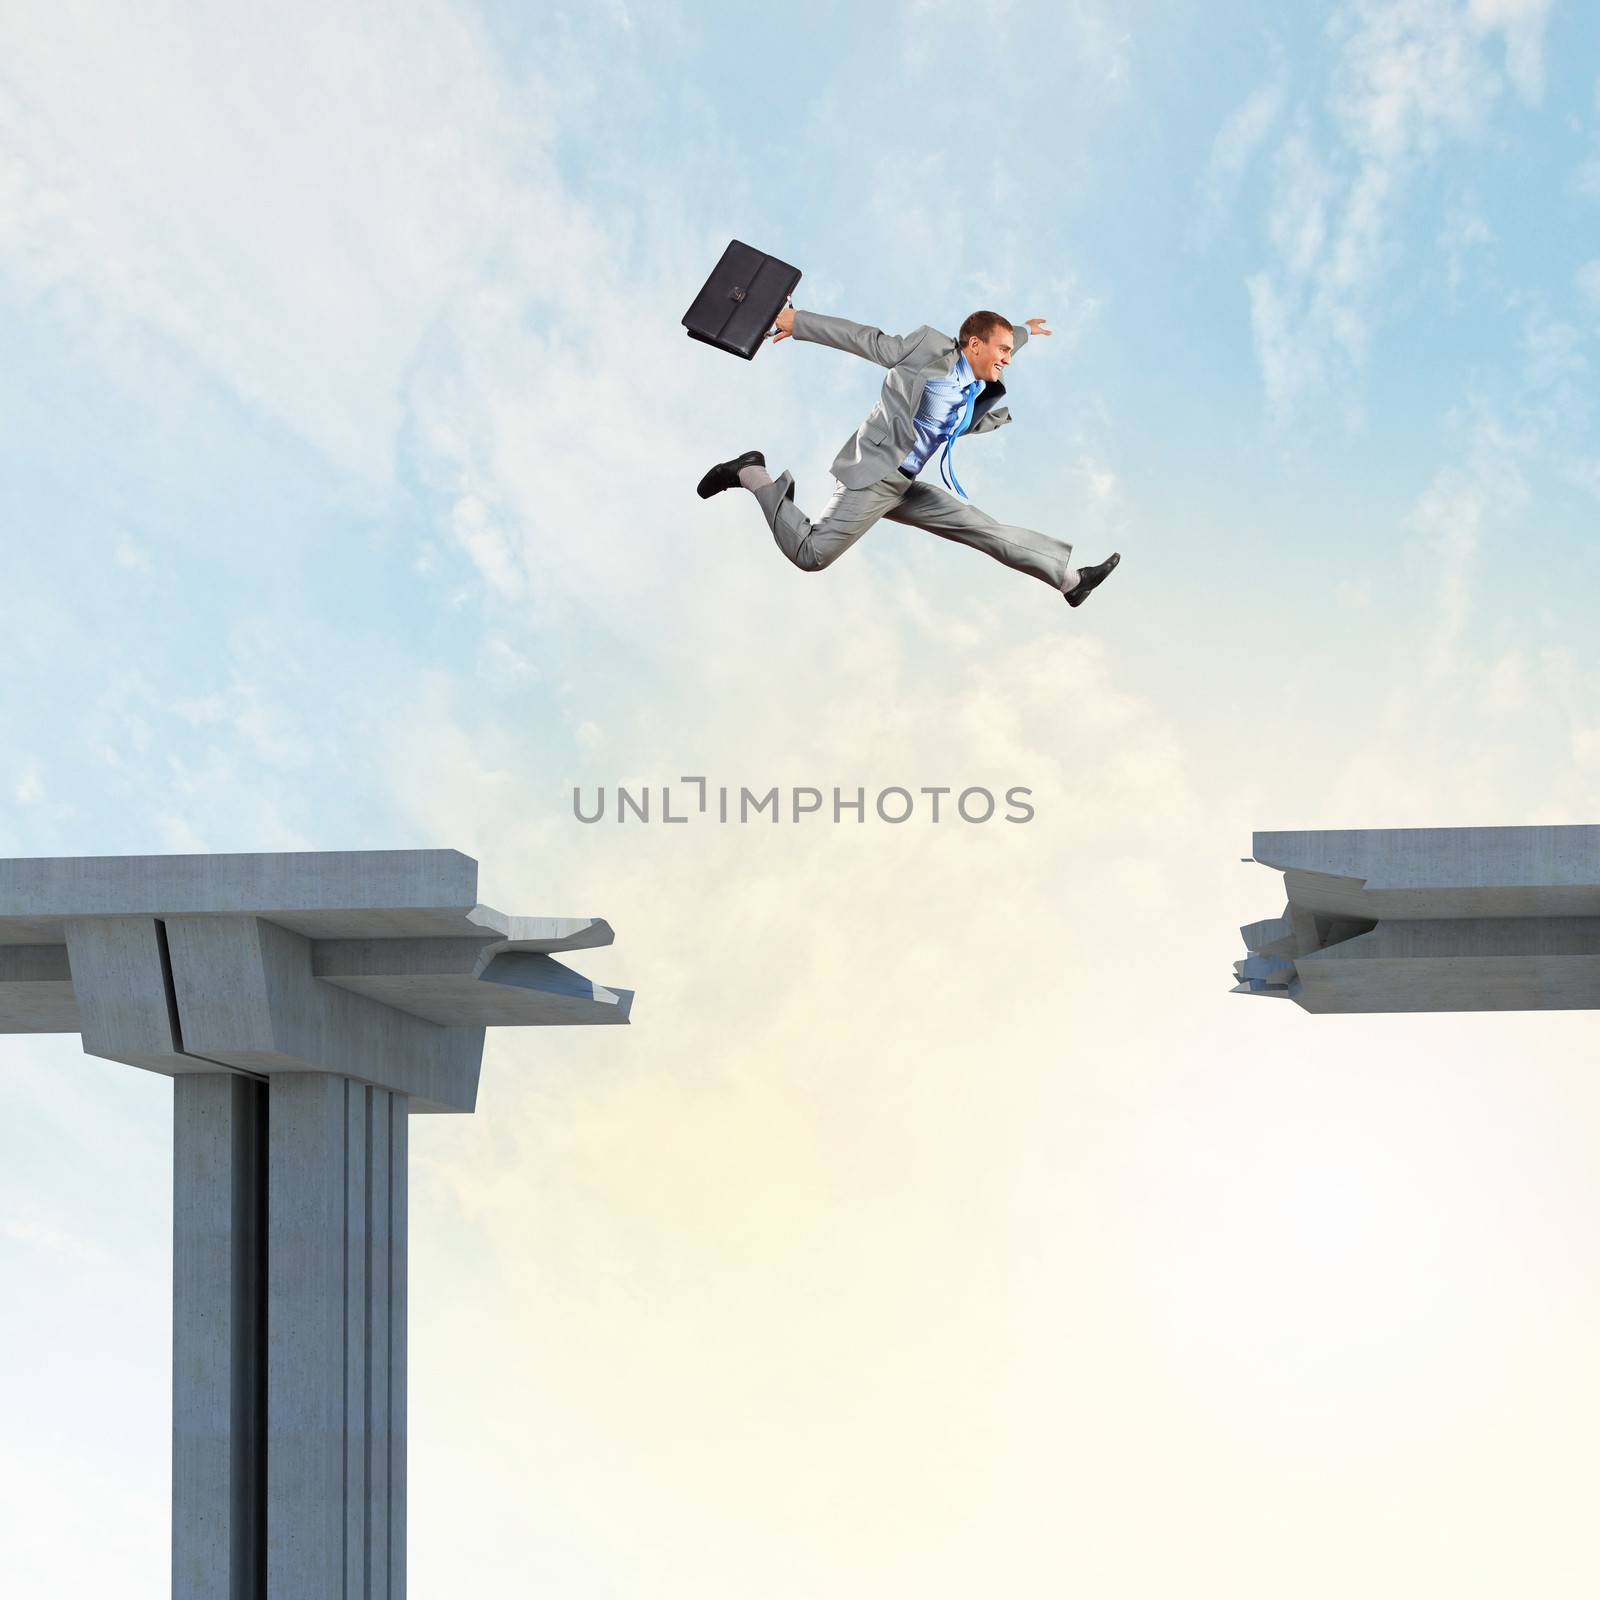 Businessman jumping over a gap in the bridge as a symbol of bridge